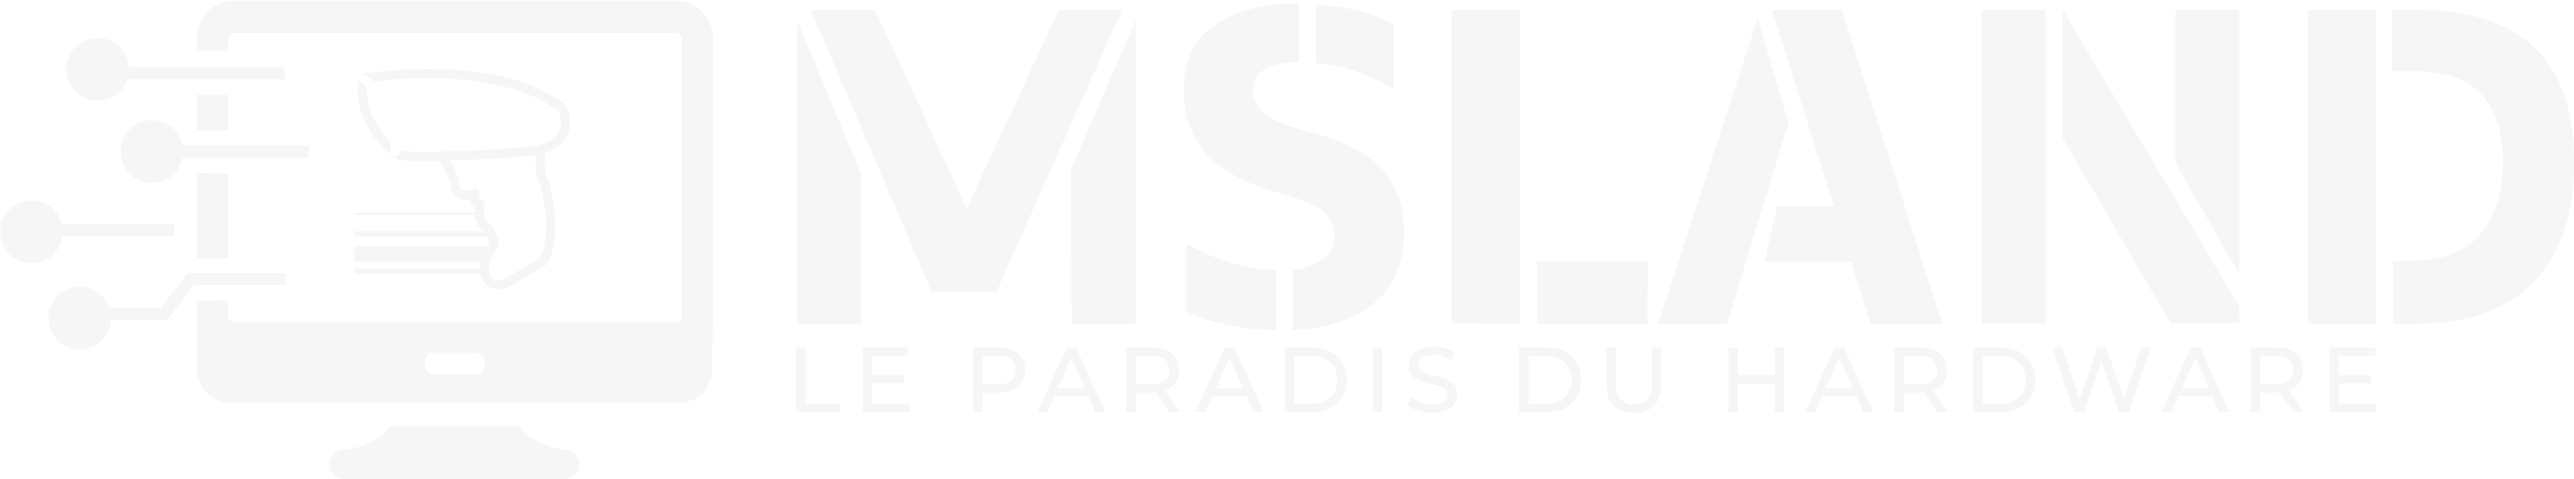 solution point de vente - msland logo